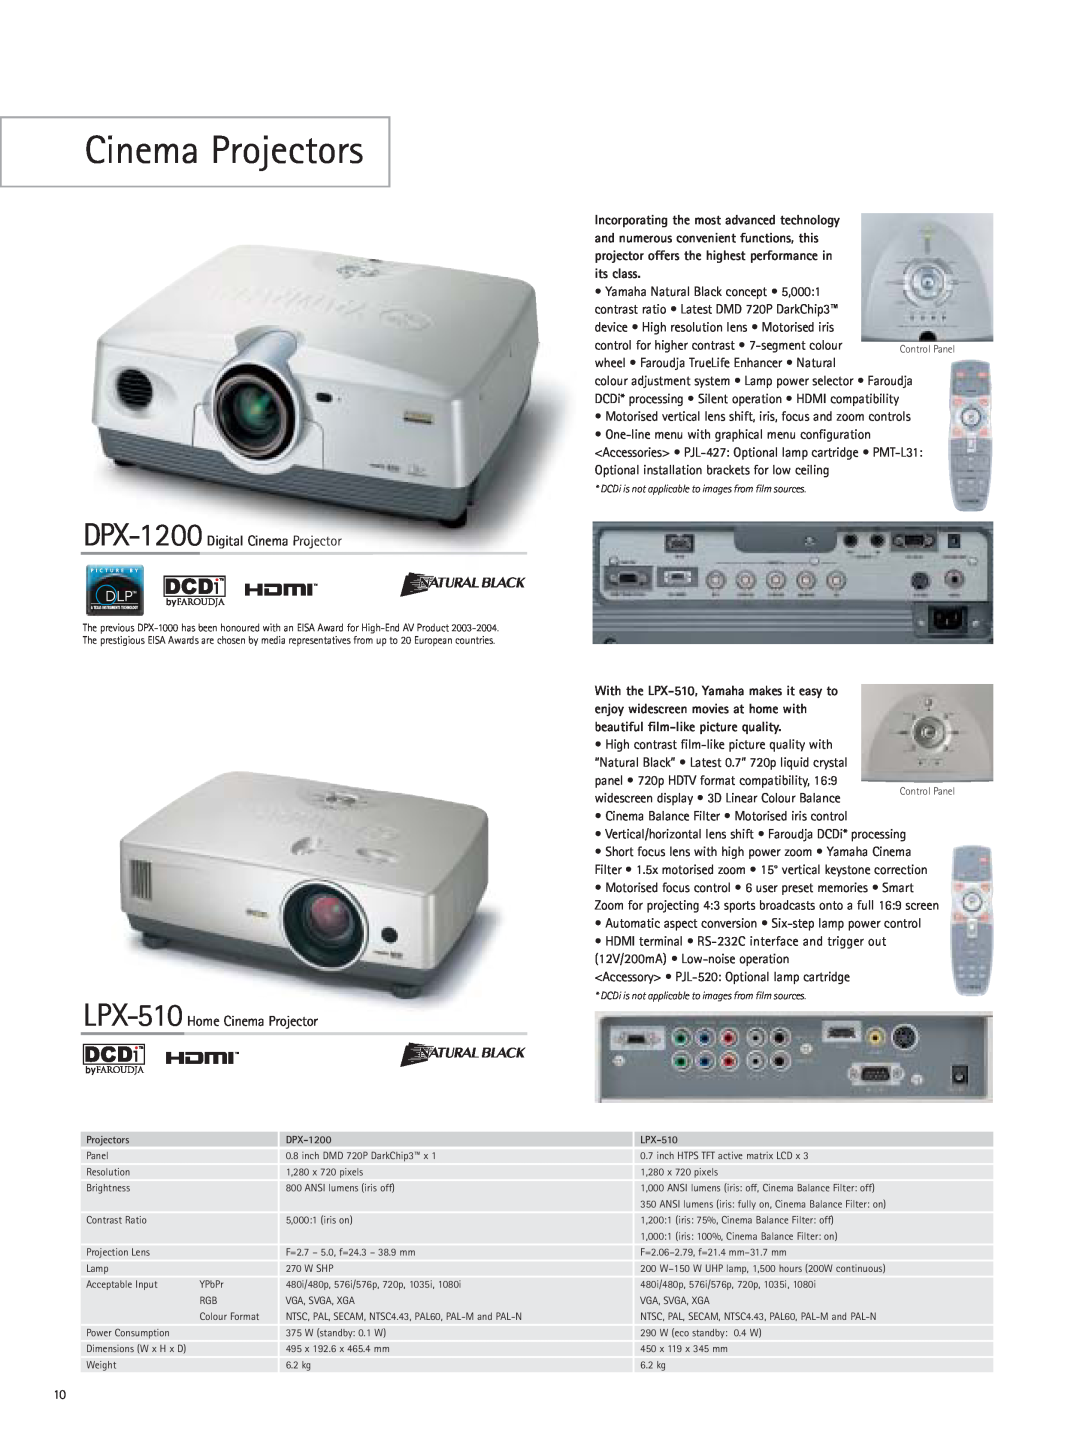 Yamaha RX-Z9 manual Cinema Projectors, DPX-1200 Digital Cinema Projector, LPX-510 Home Cinema Projector 